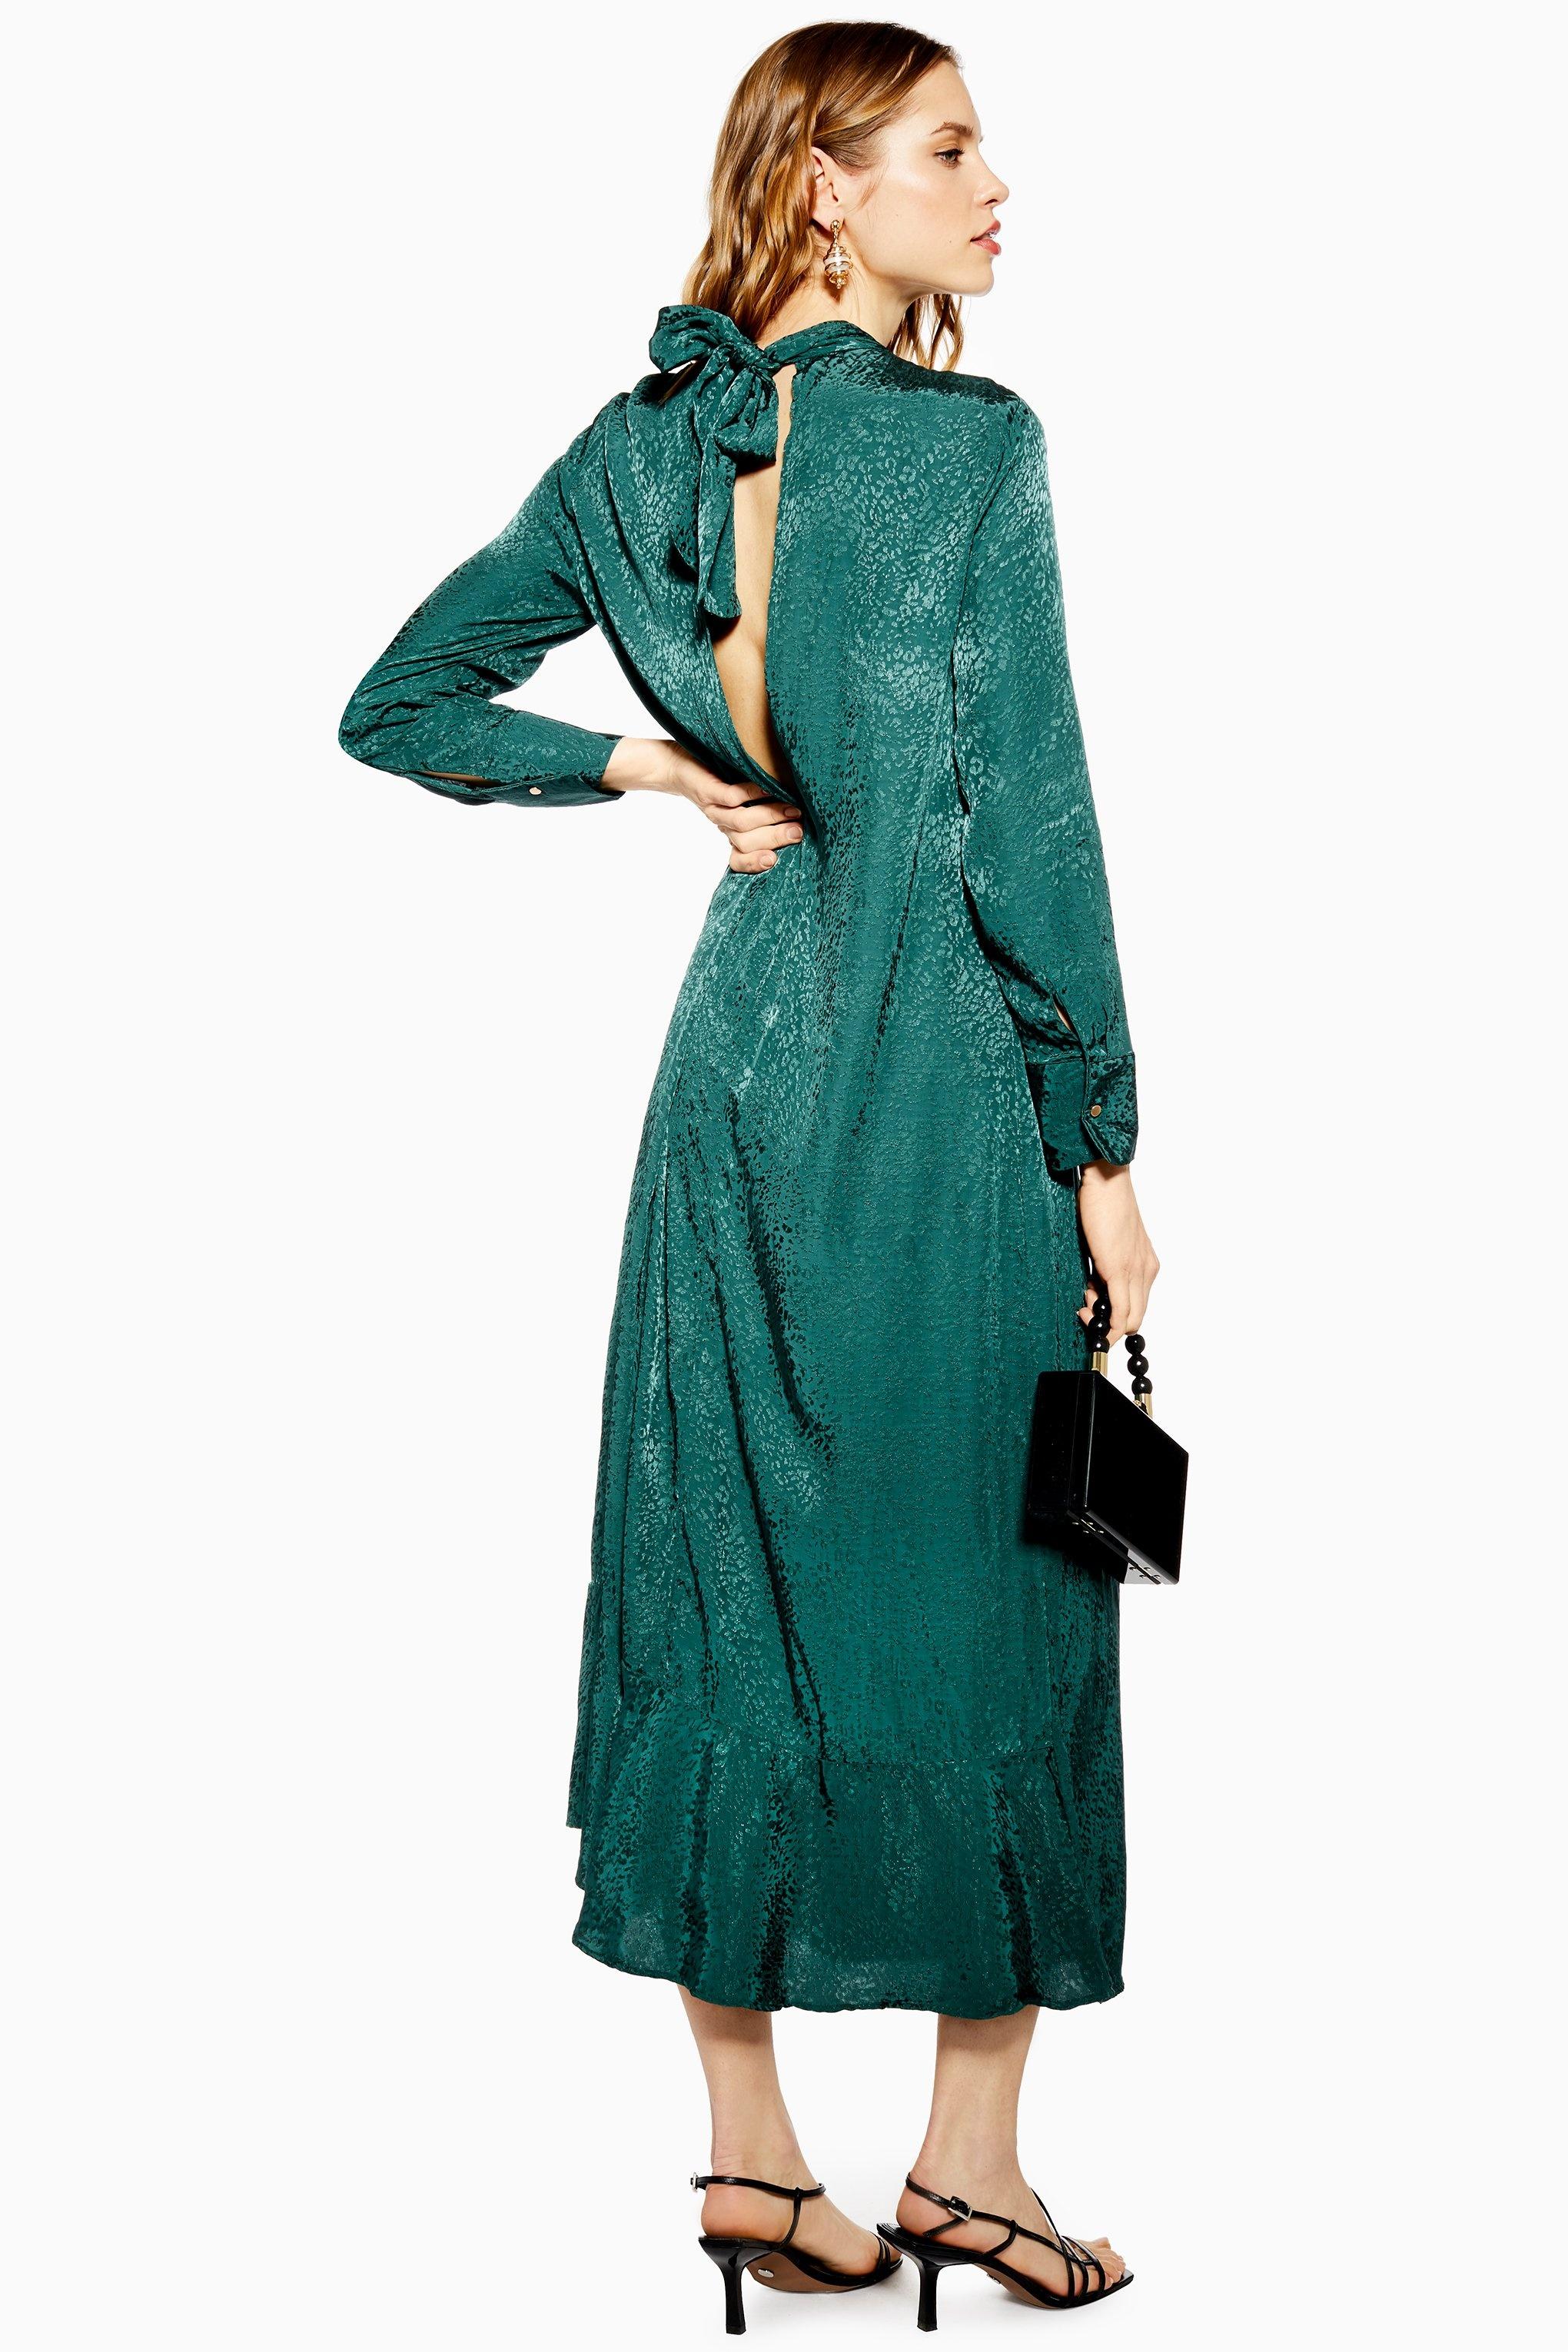 Topshop Green Midi Dress Top Sellers ...